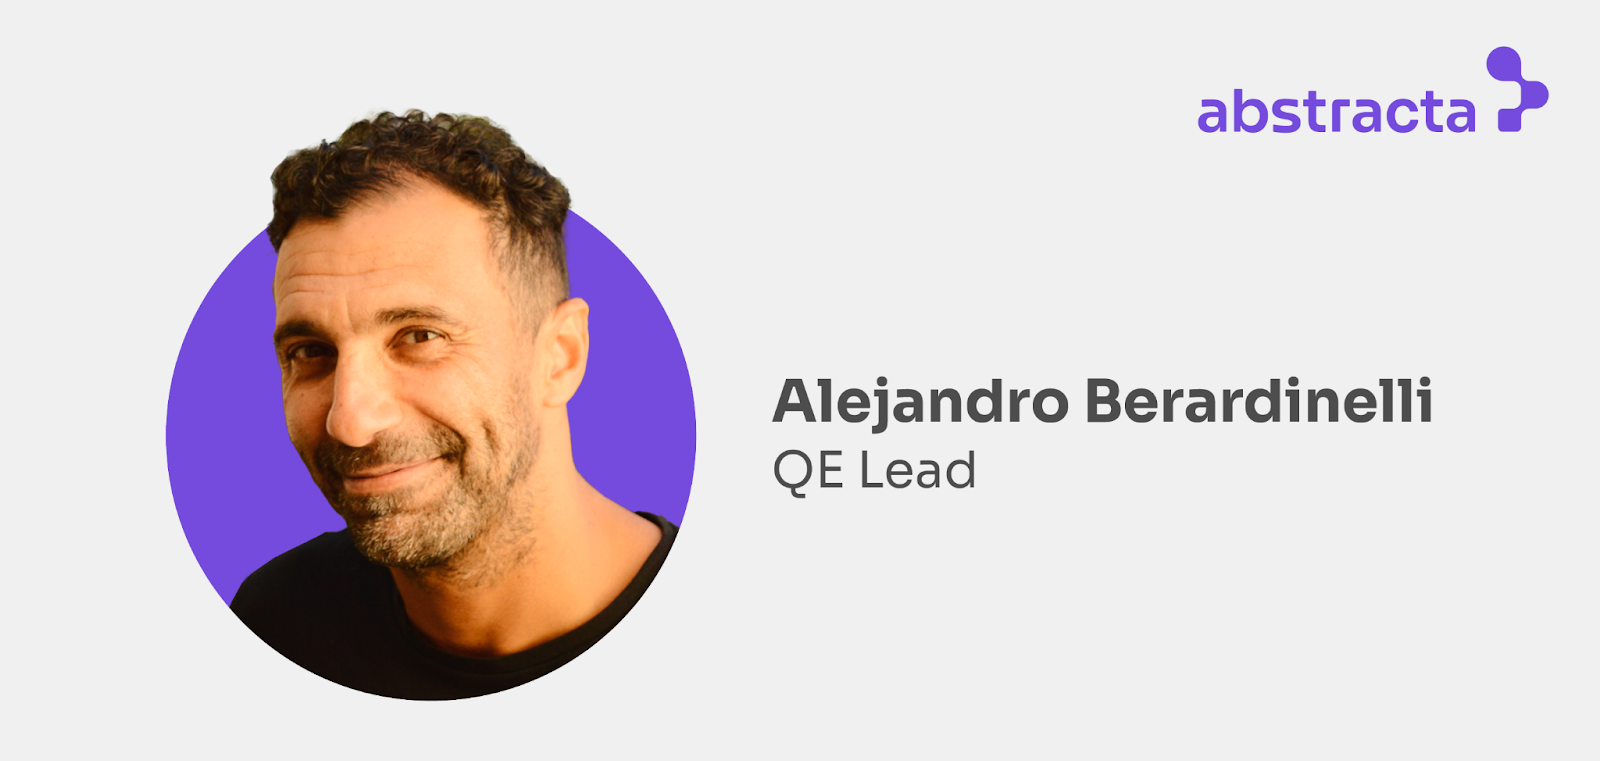 Alejandro Berardinelli
QE Lead